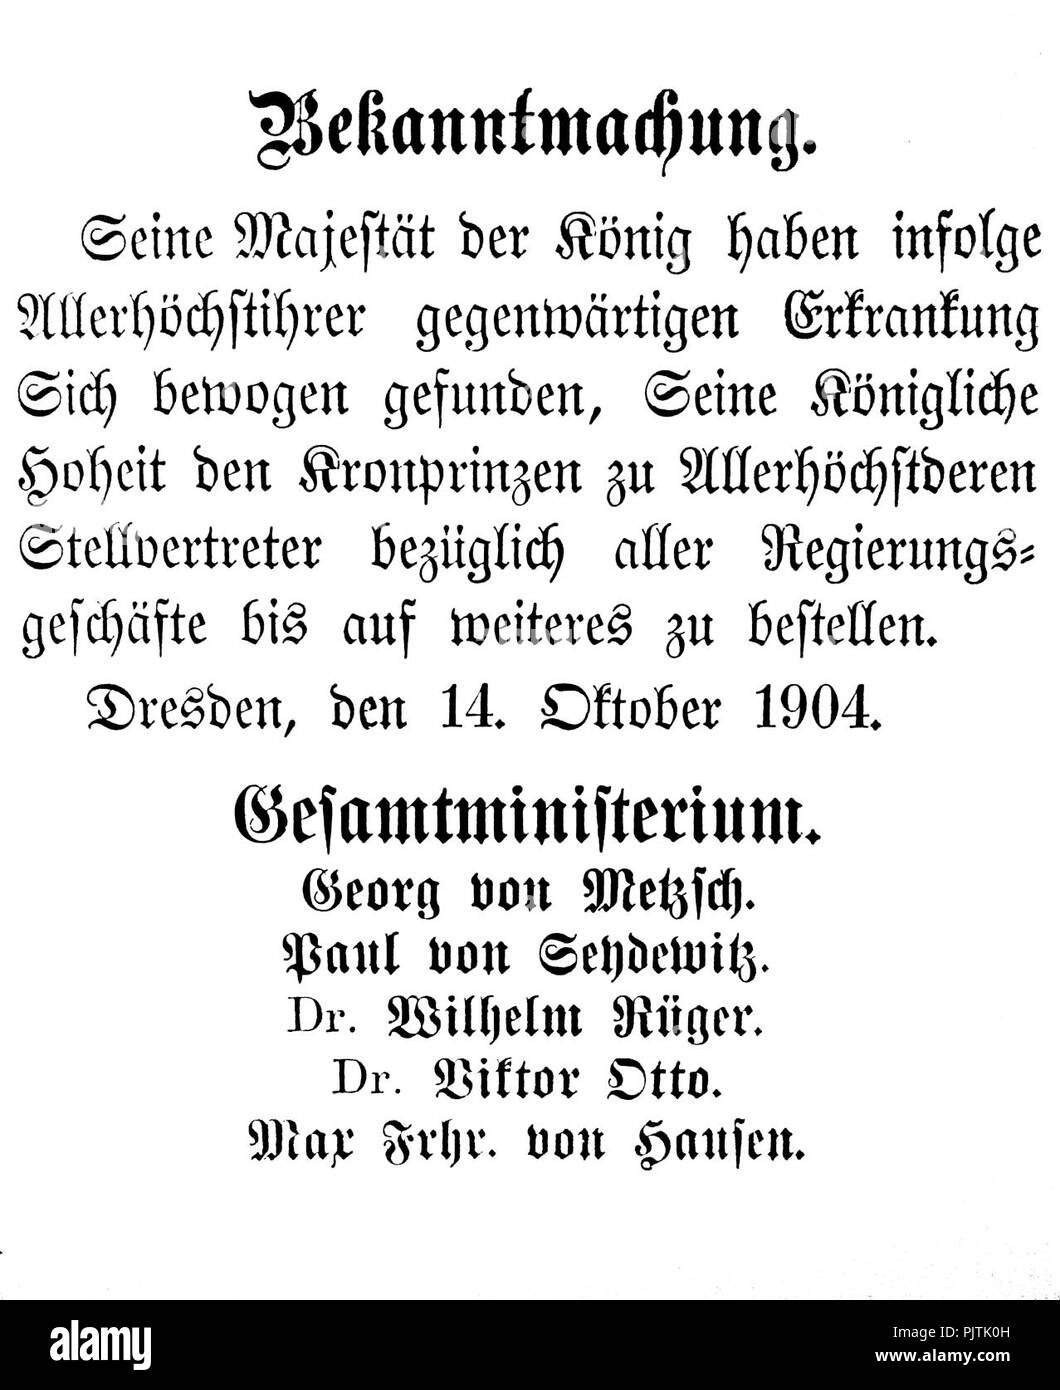 Bekanntmachung Regierungsübernahme Friedrich August III-2. Stock Photo